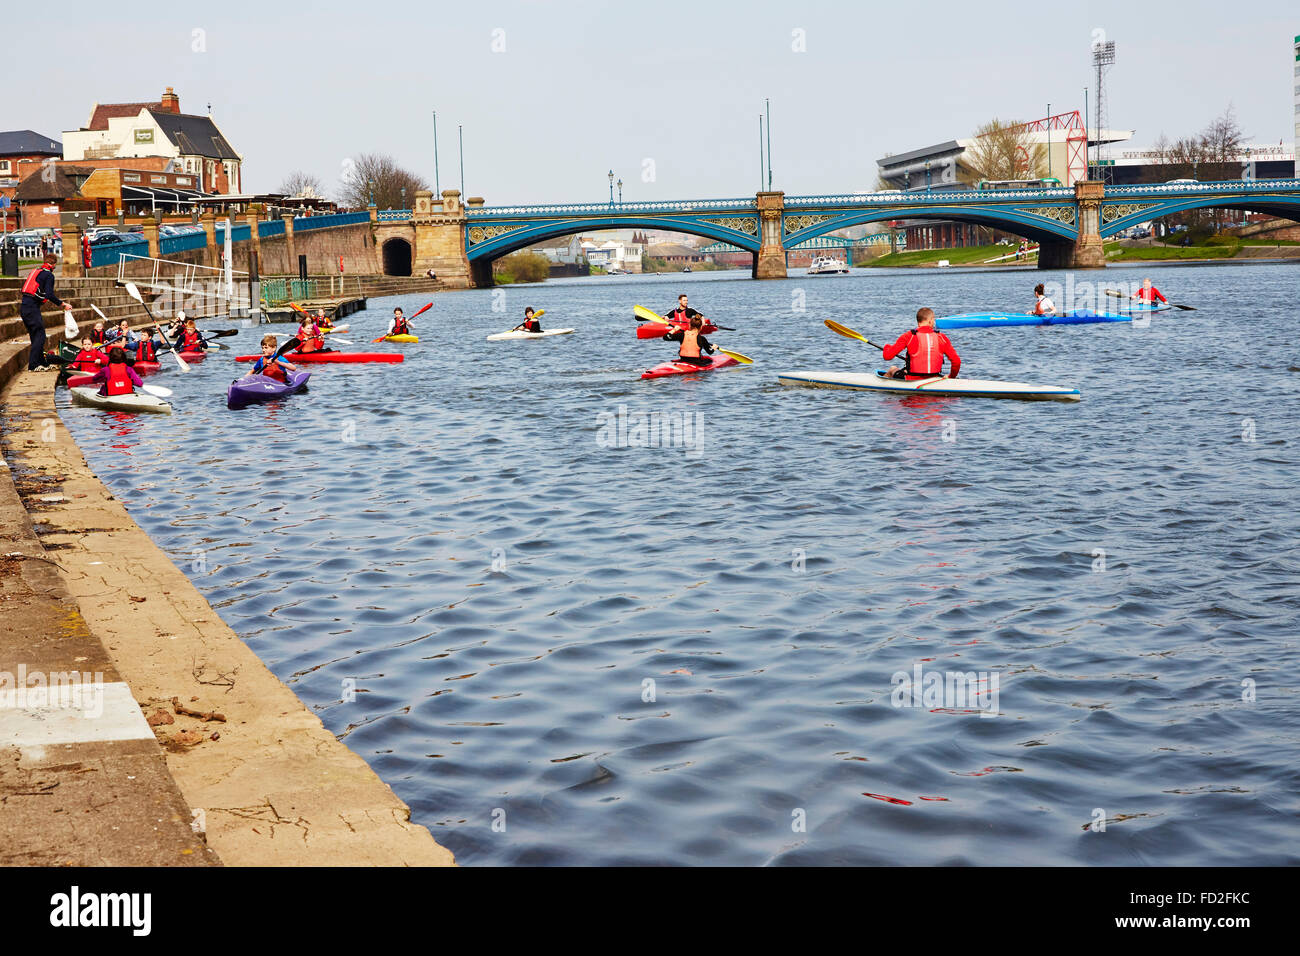 People kayaking on the River Trent near Trent Bridge, Nottingham, England, UK. Stock Photo